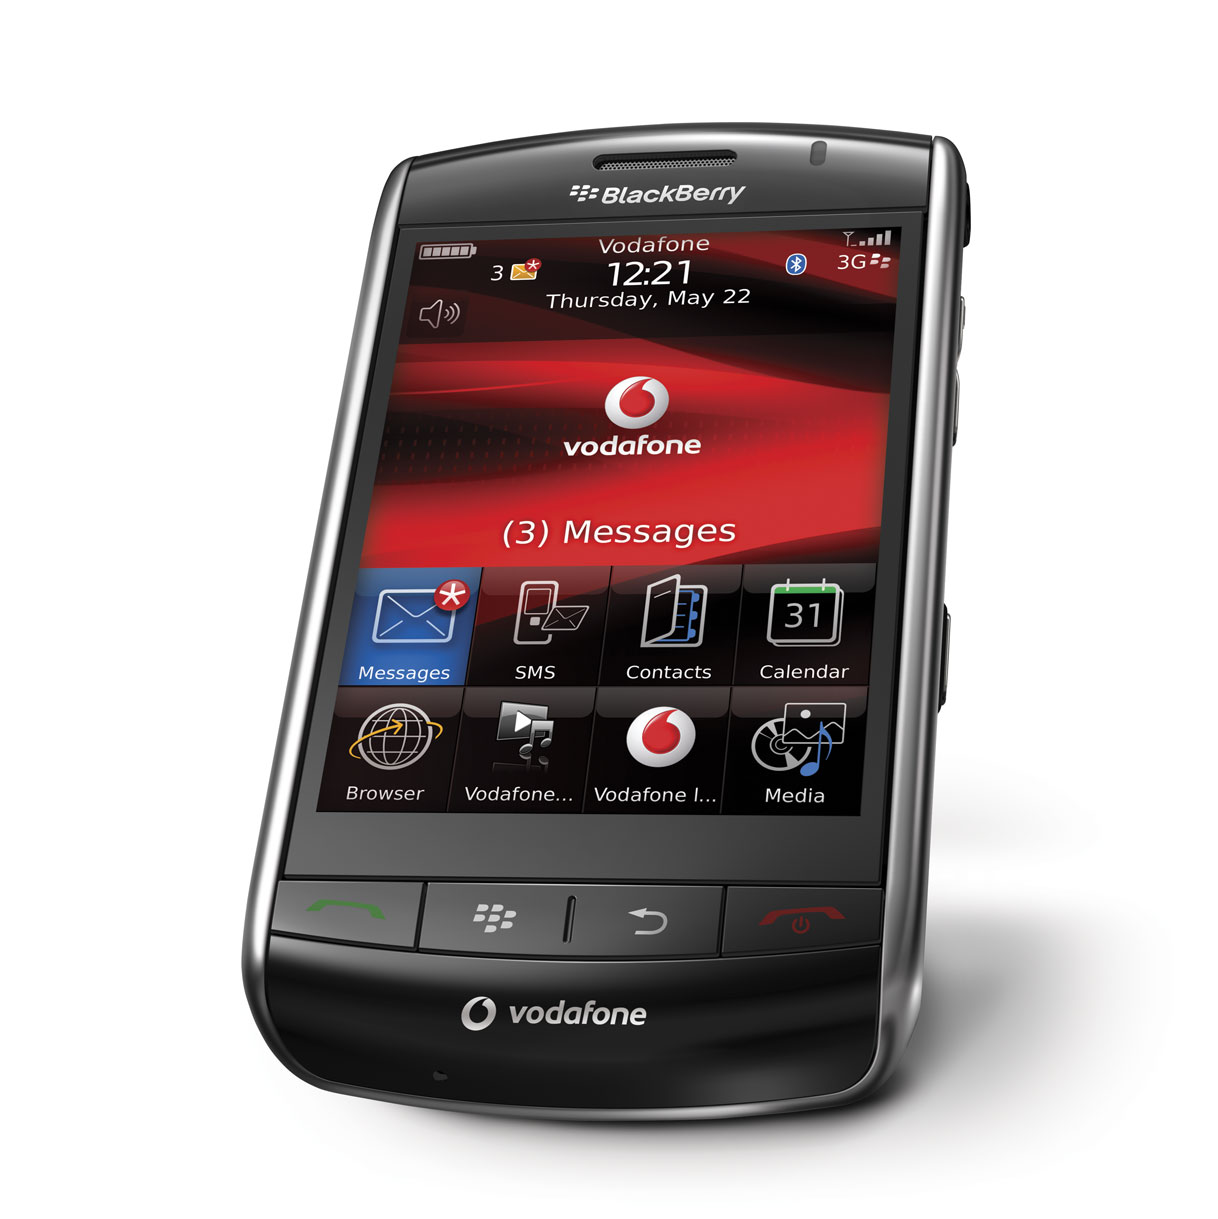 BlackBerry Storm 9500 come nuovo